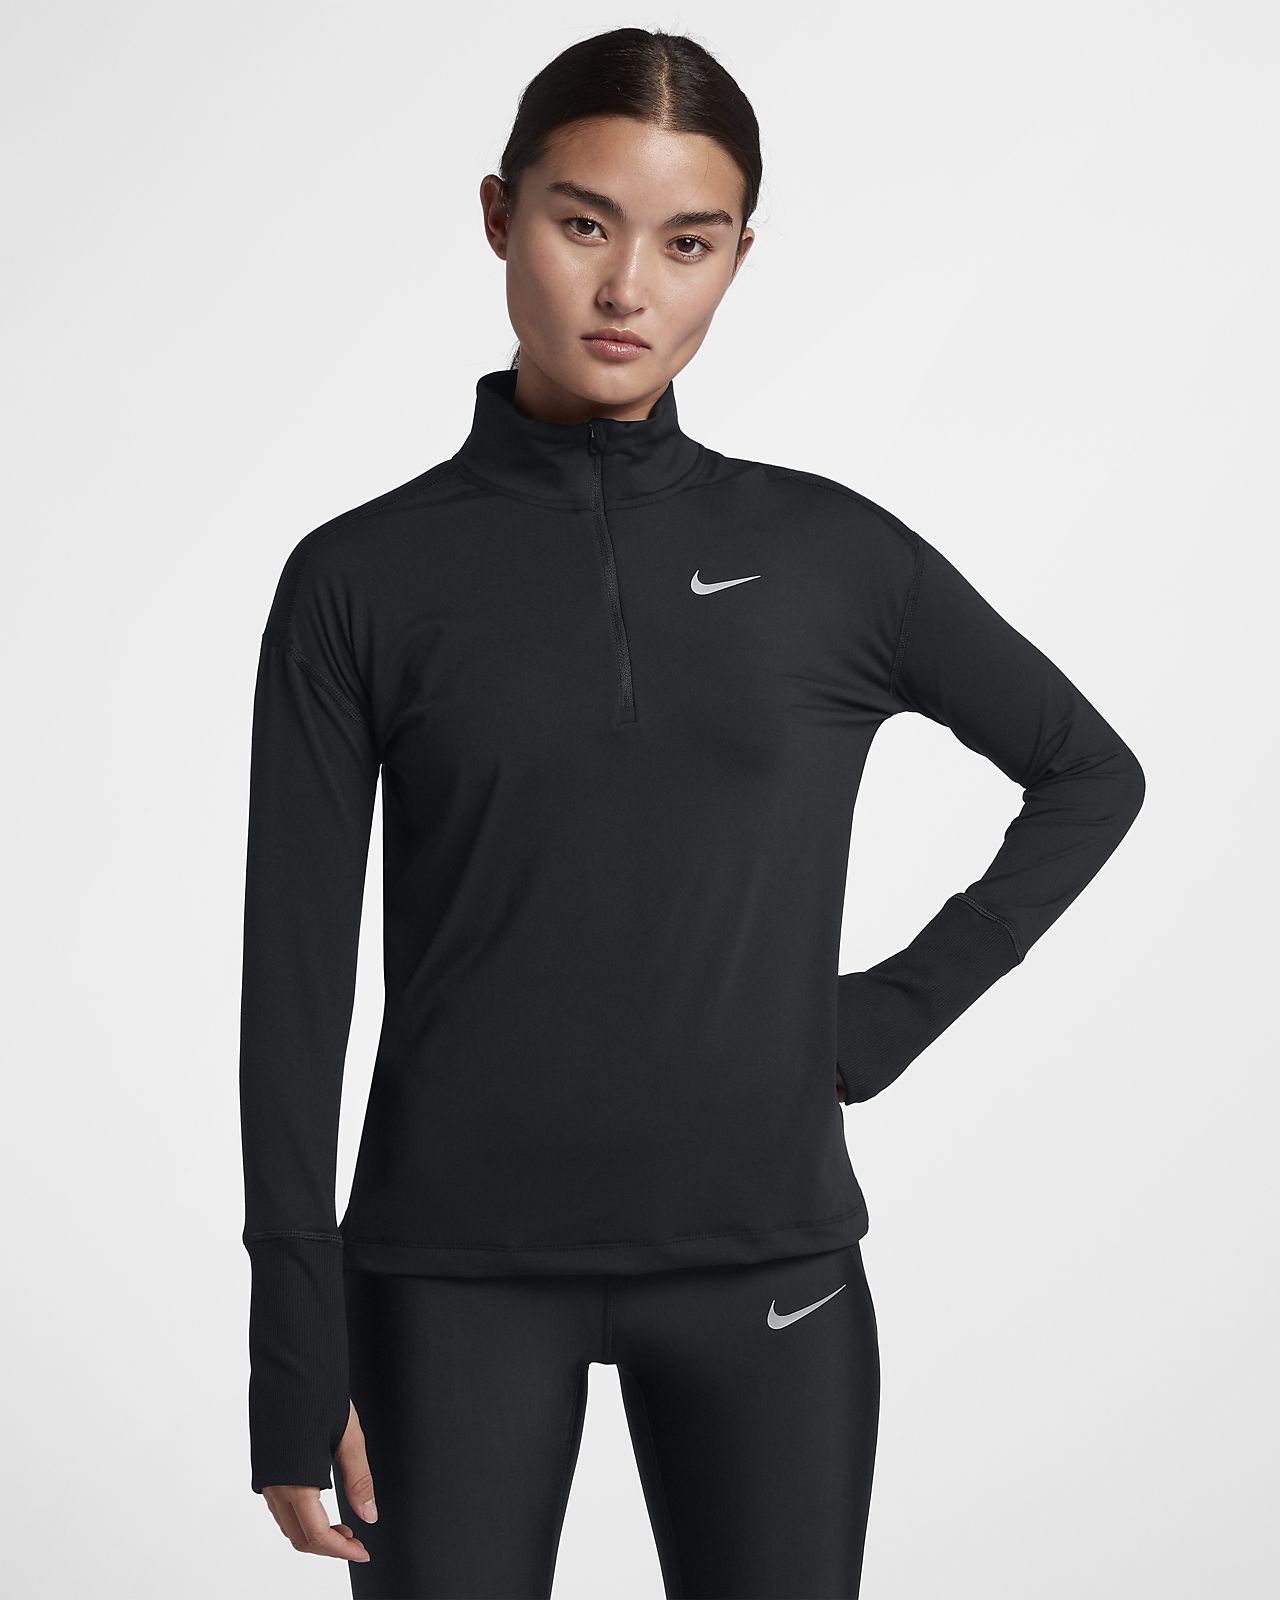 Download Nike Element Women's 1/2-Zip Running Top. Nike SG